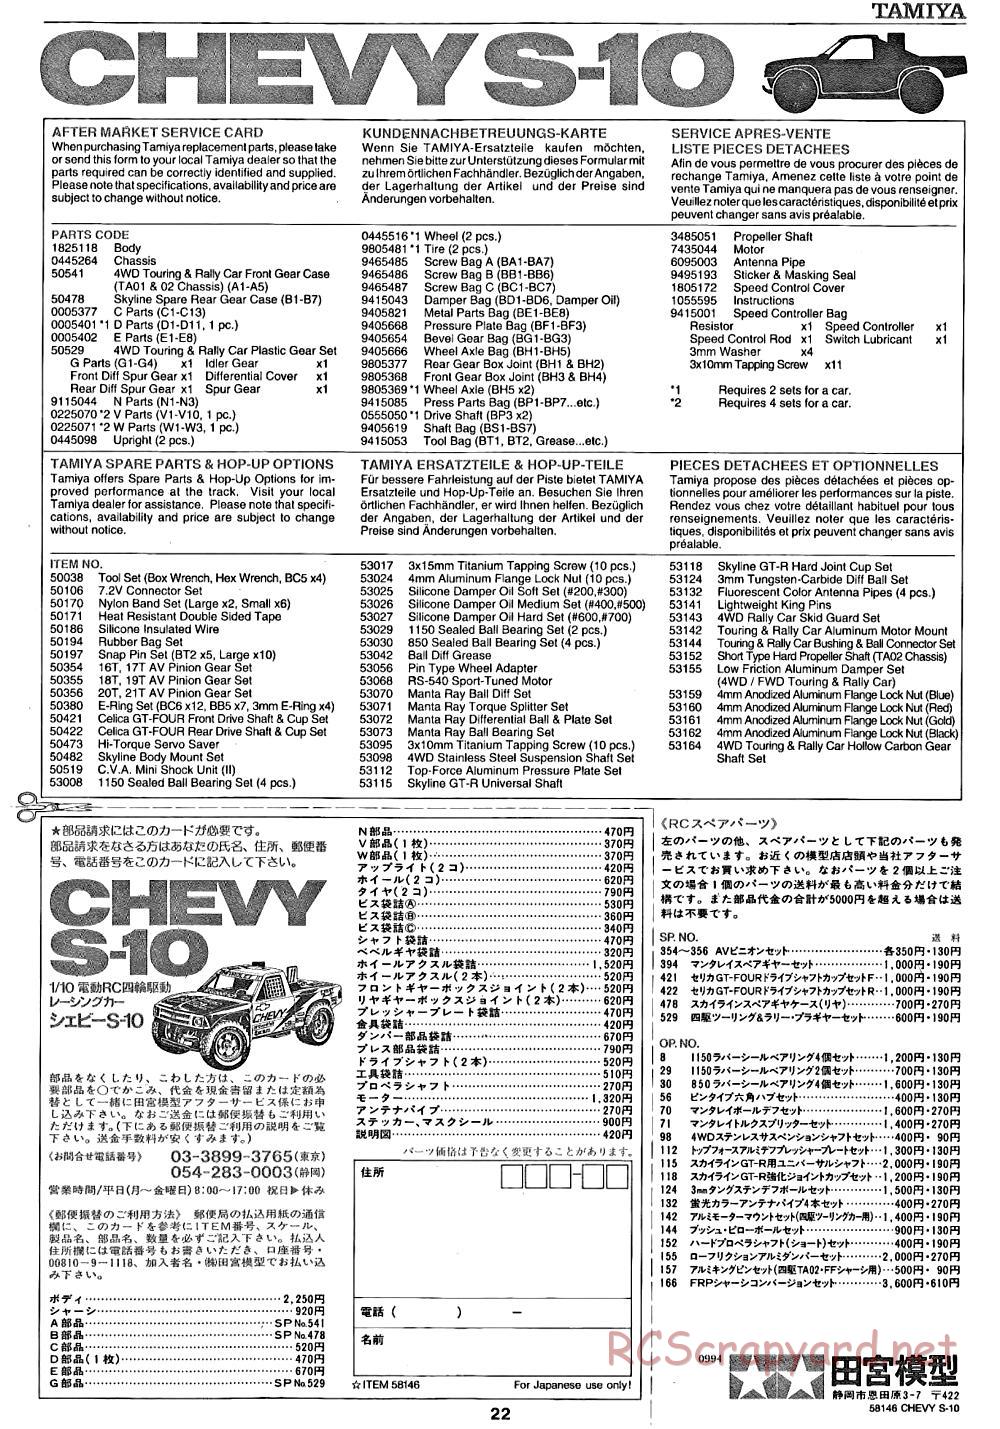 Tamiya - Chevy S-10 Chassis - Manual - Page 22